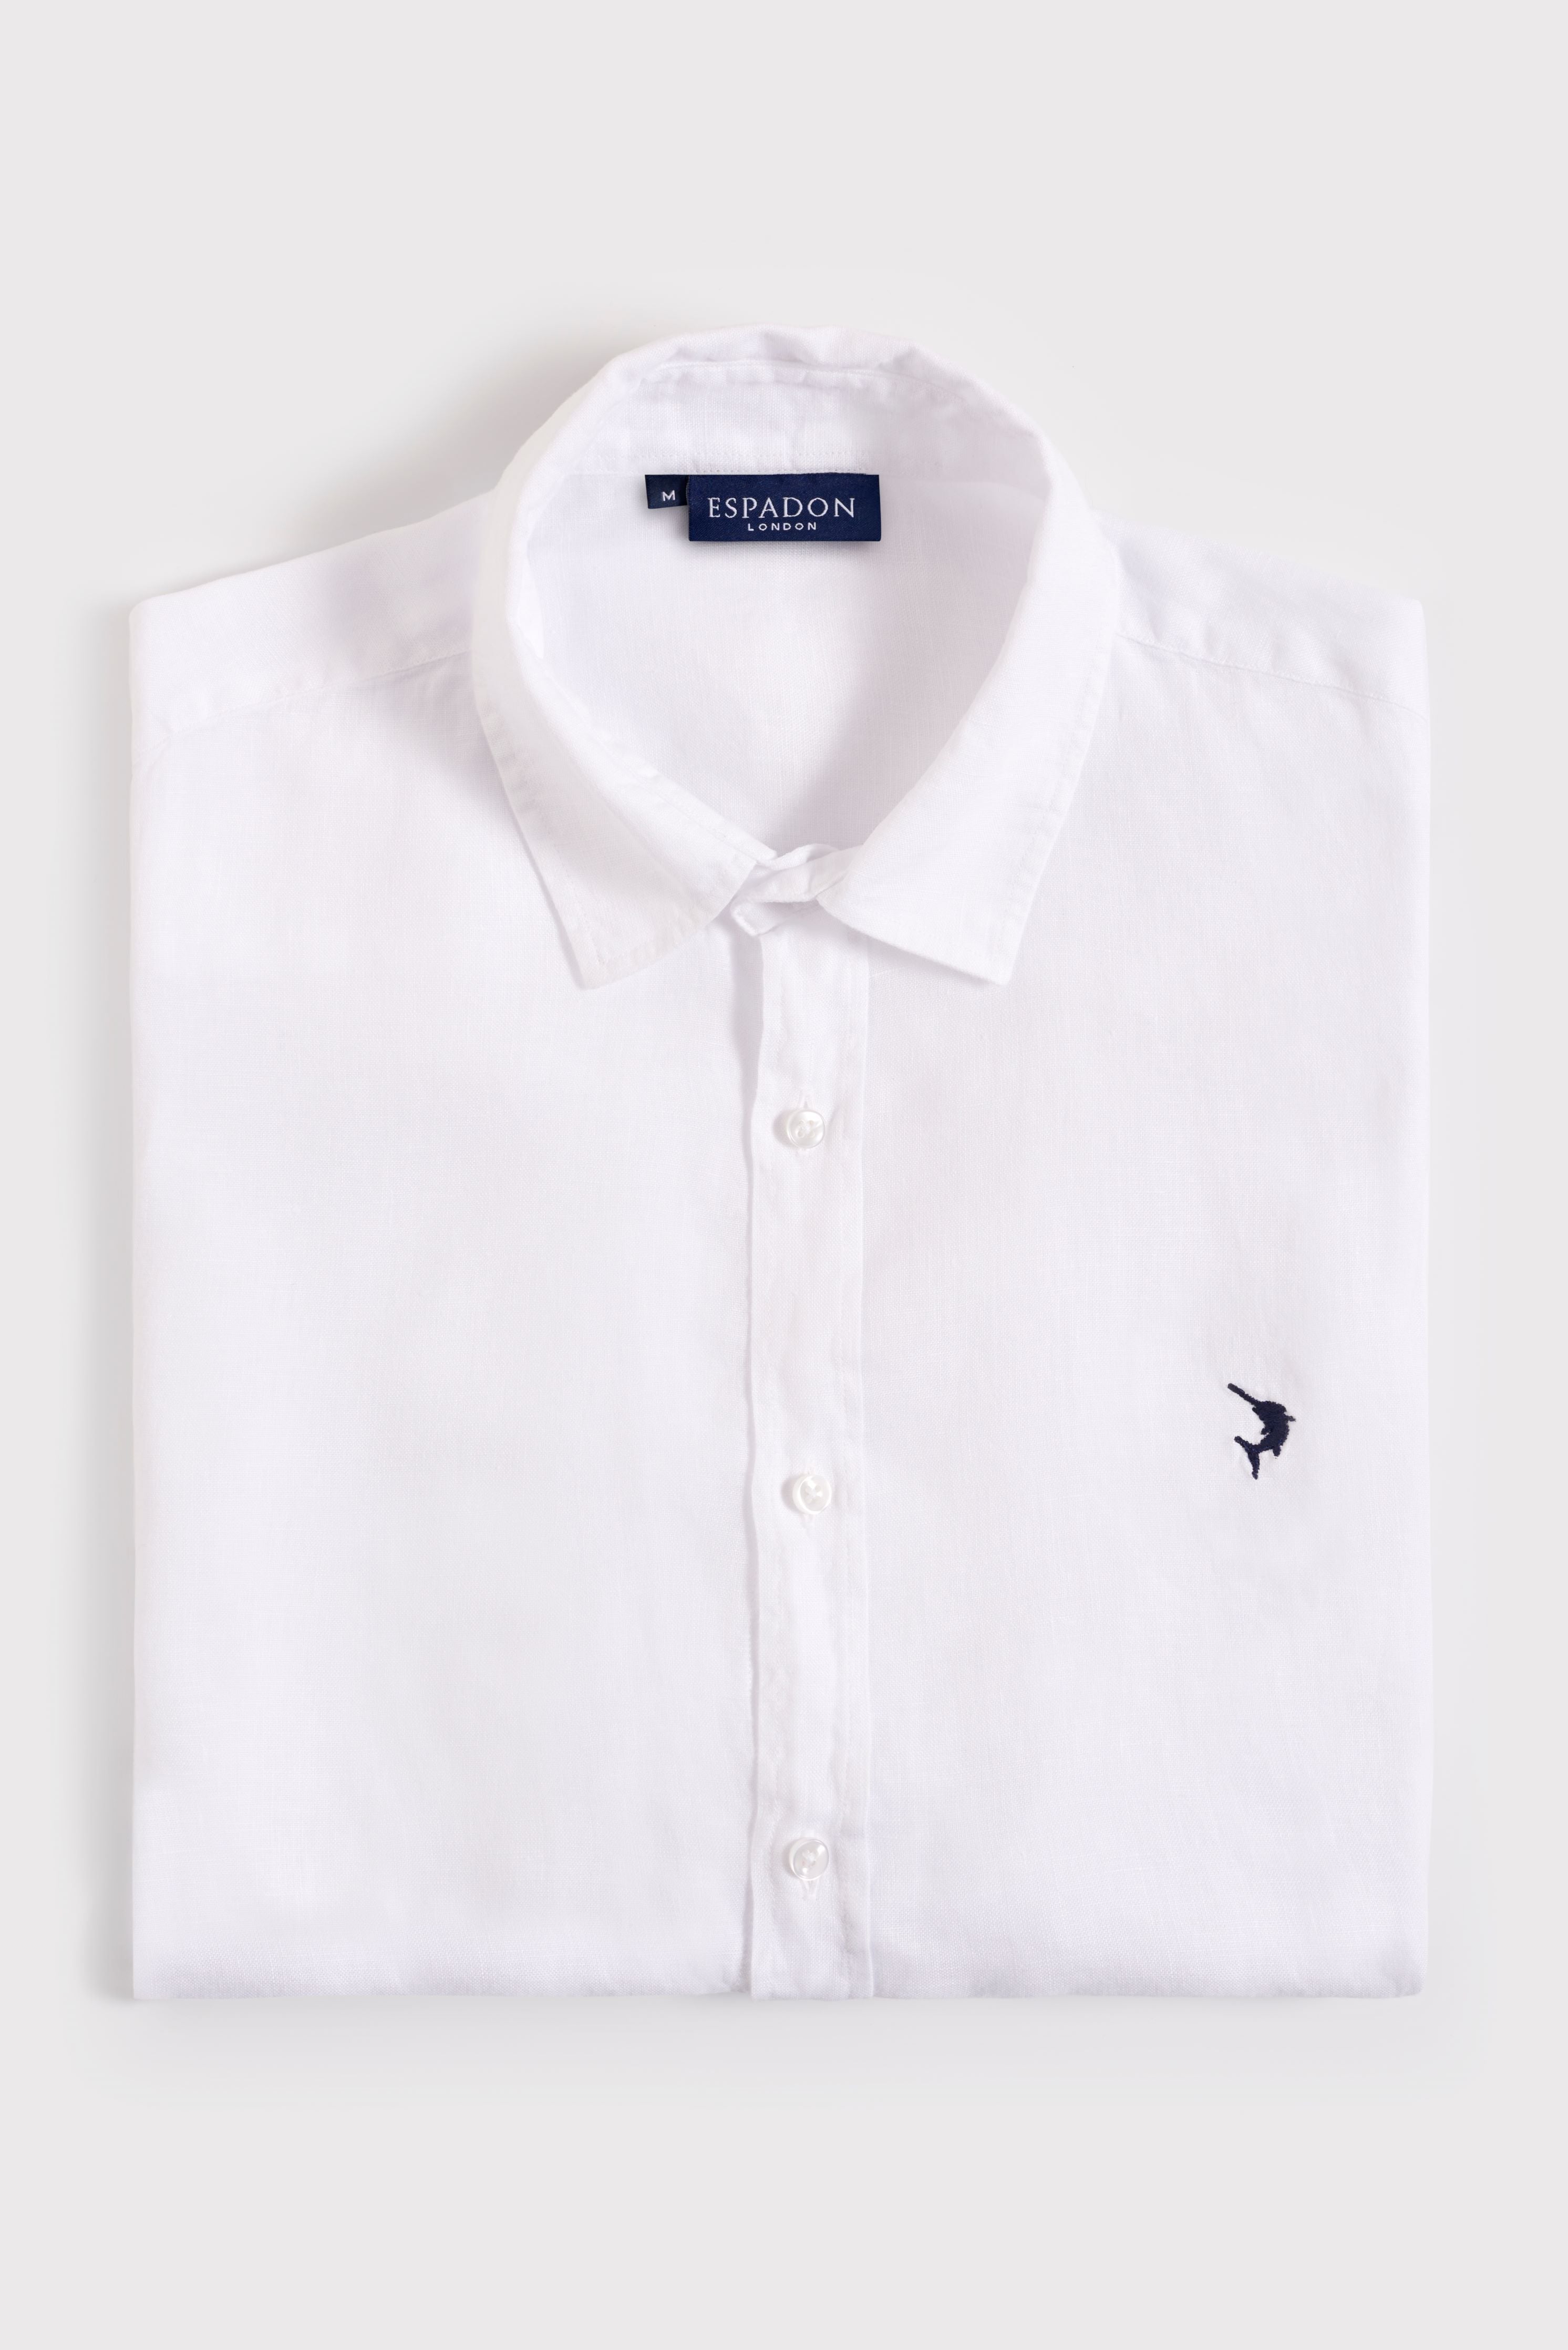 Espadon Classic Linen Shirt - White